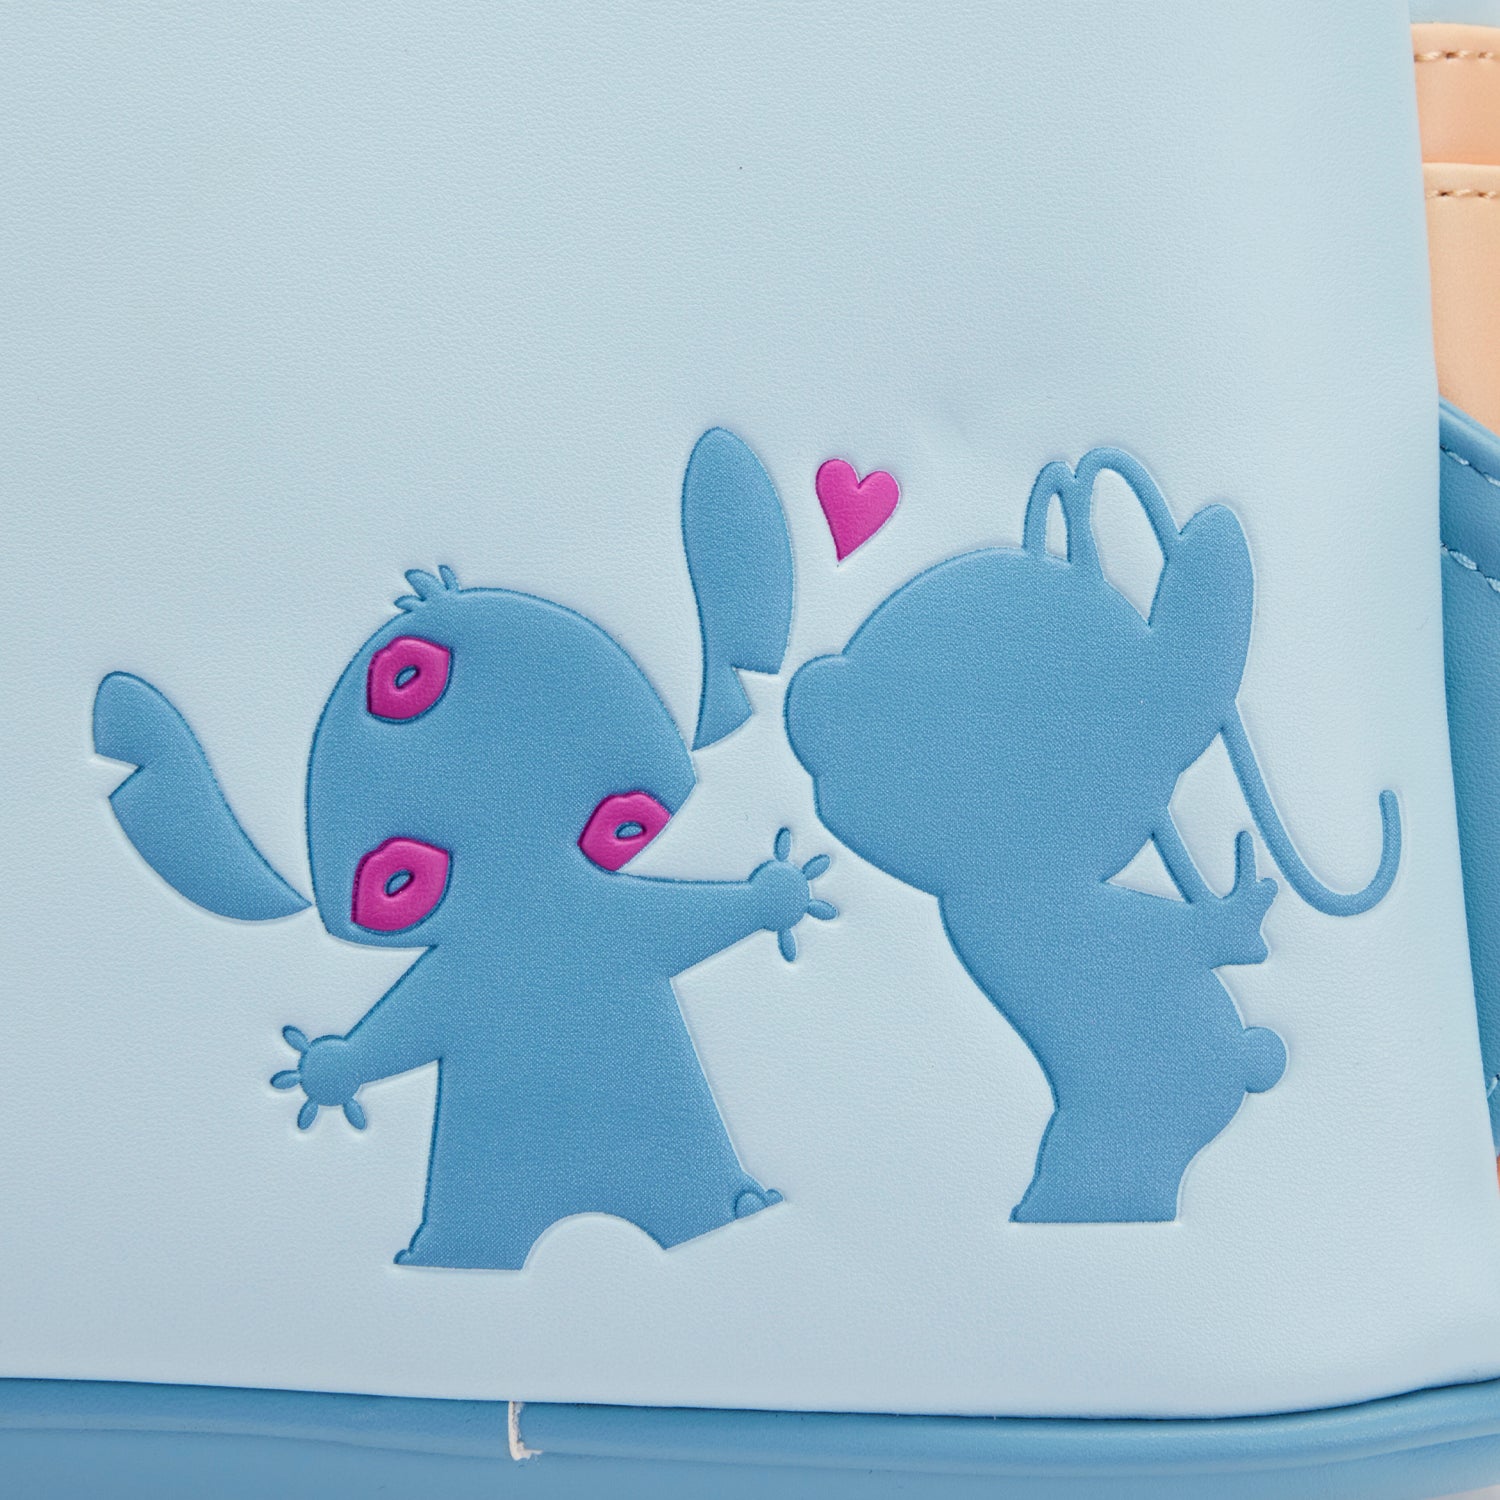 Disney | Lilo and Stitch Snow Cone Date Mini Backpack